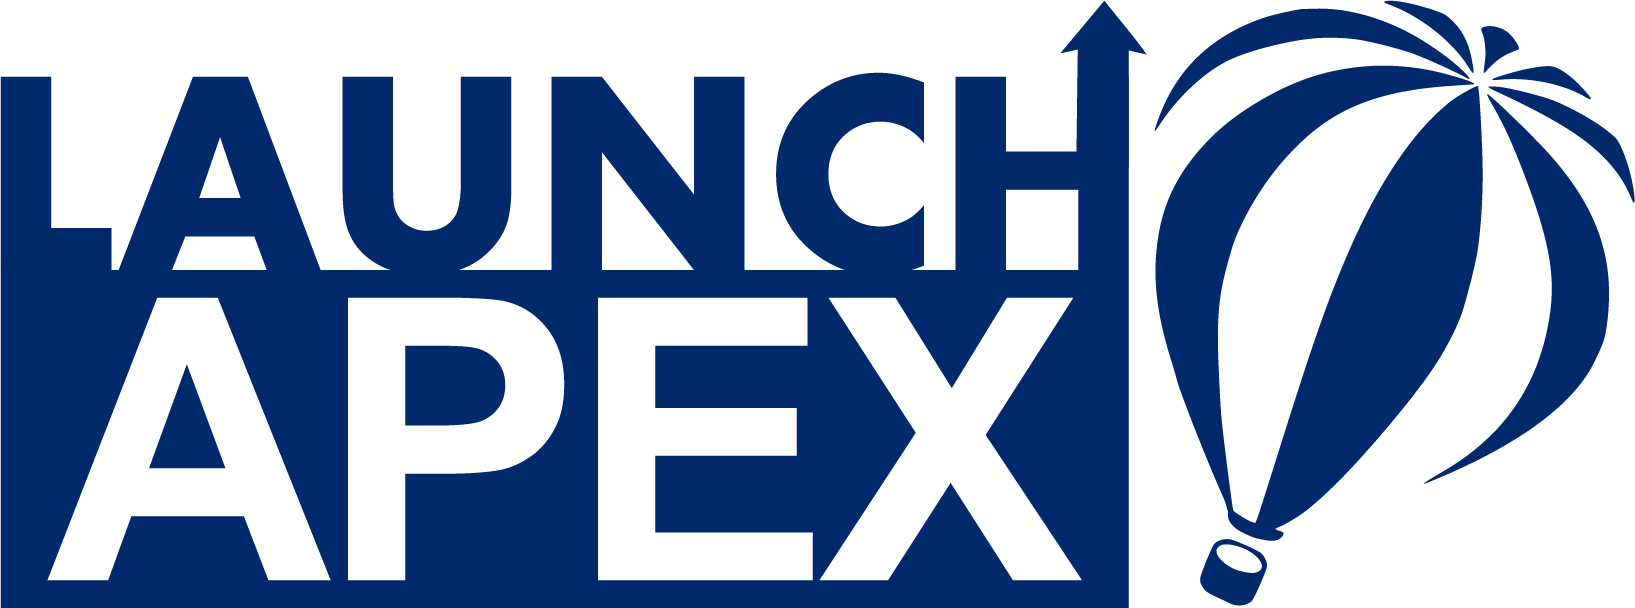 LaunchAPEX: A Beacon for Entrepreneurs.   by Amy Iori